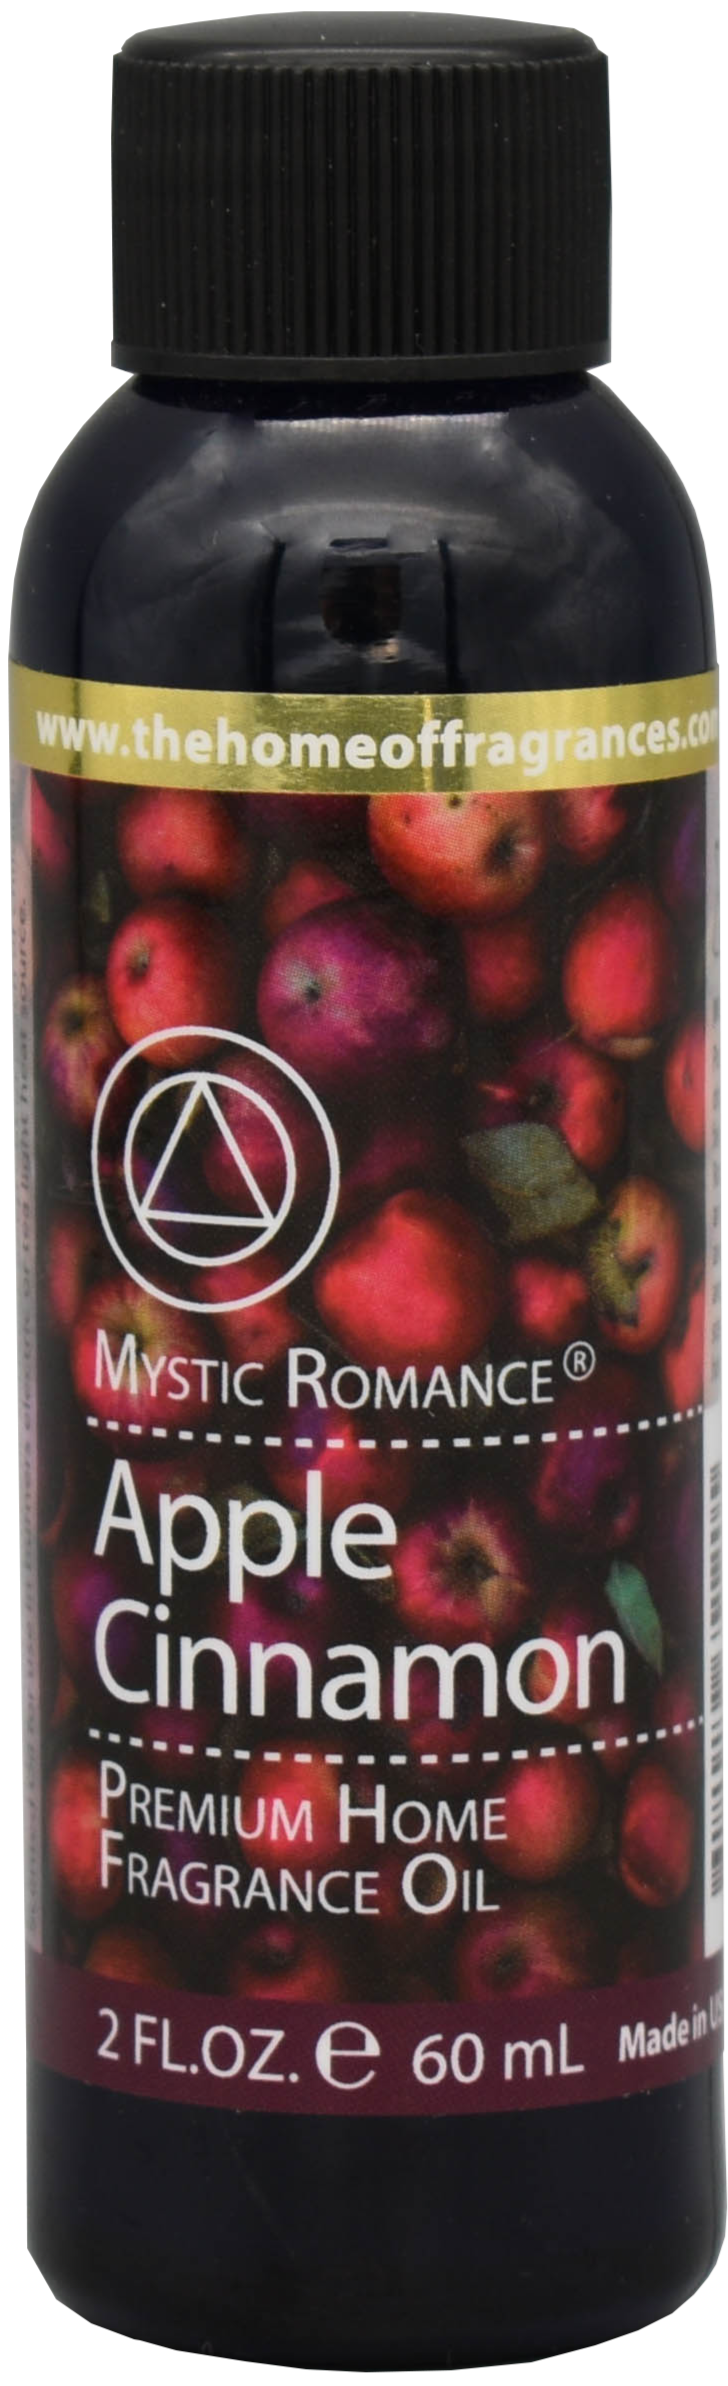 Apple Cinnamon Premium Fragrance Oil